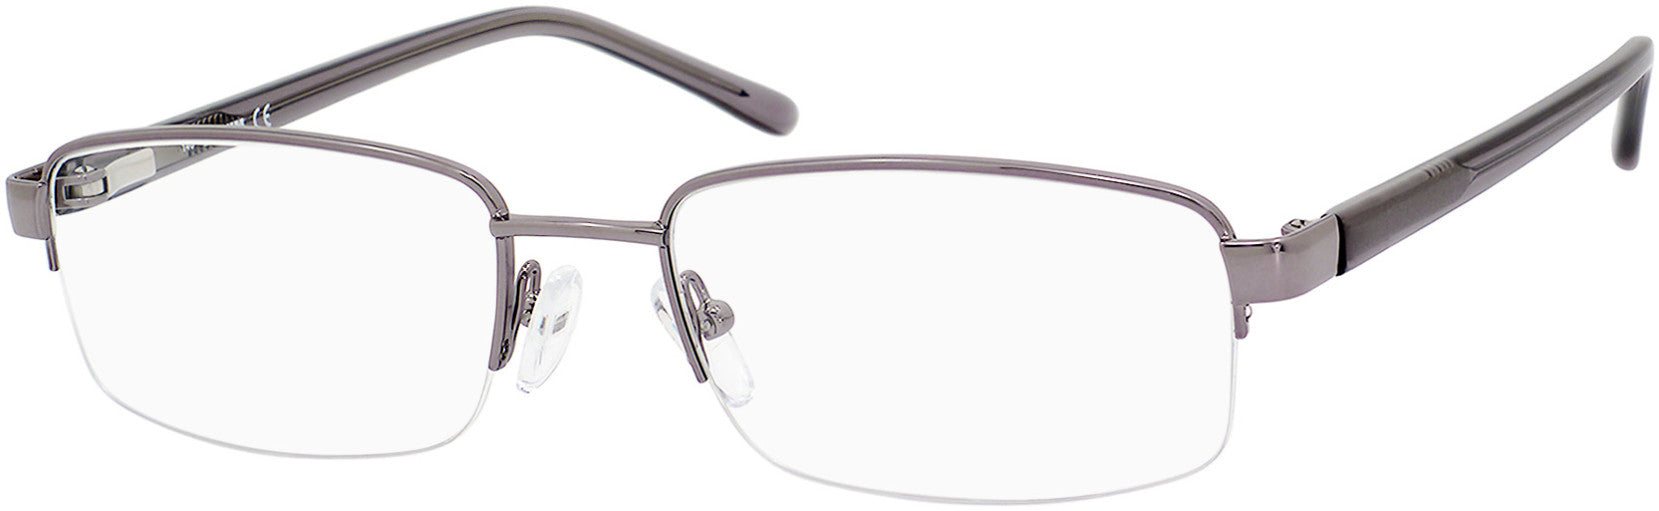  Denim 147 Rectangular Eyeglasses 0X93-0X93  Gunmetal (00 Demo Lens)